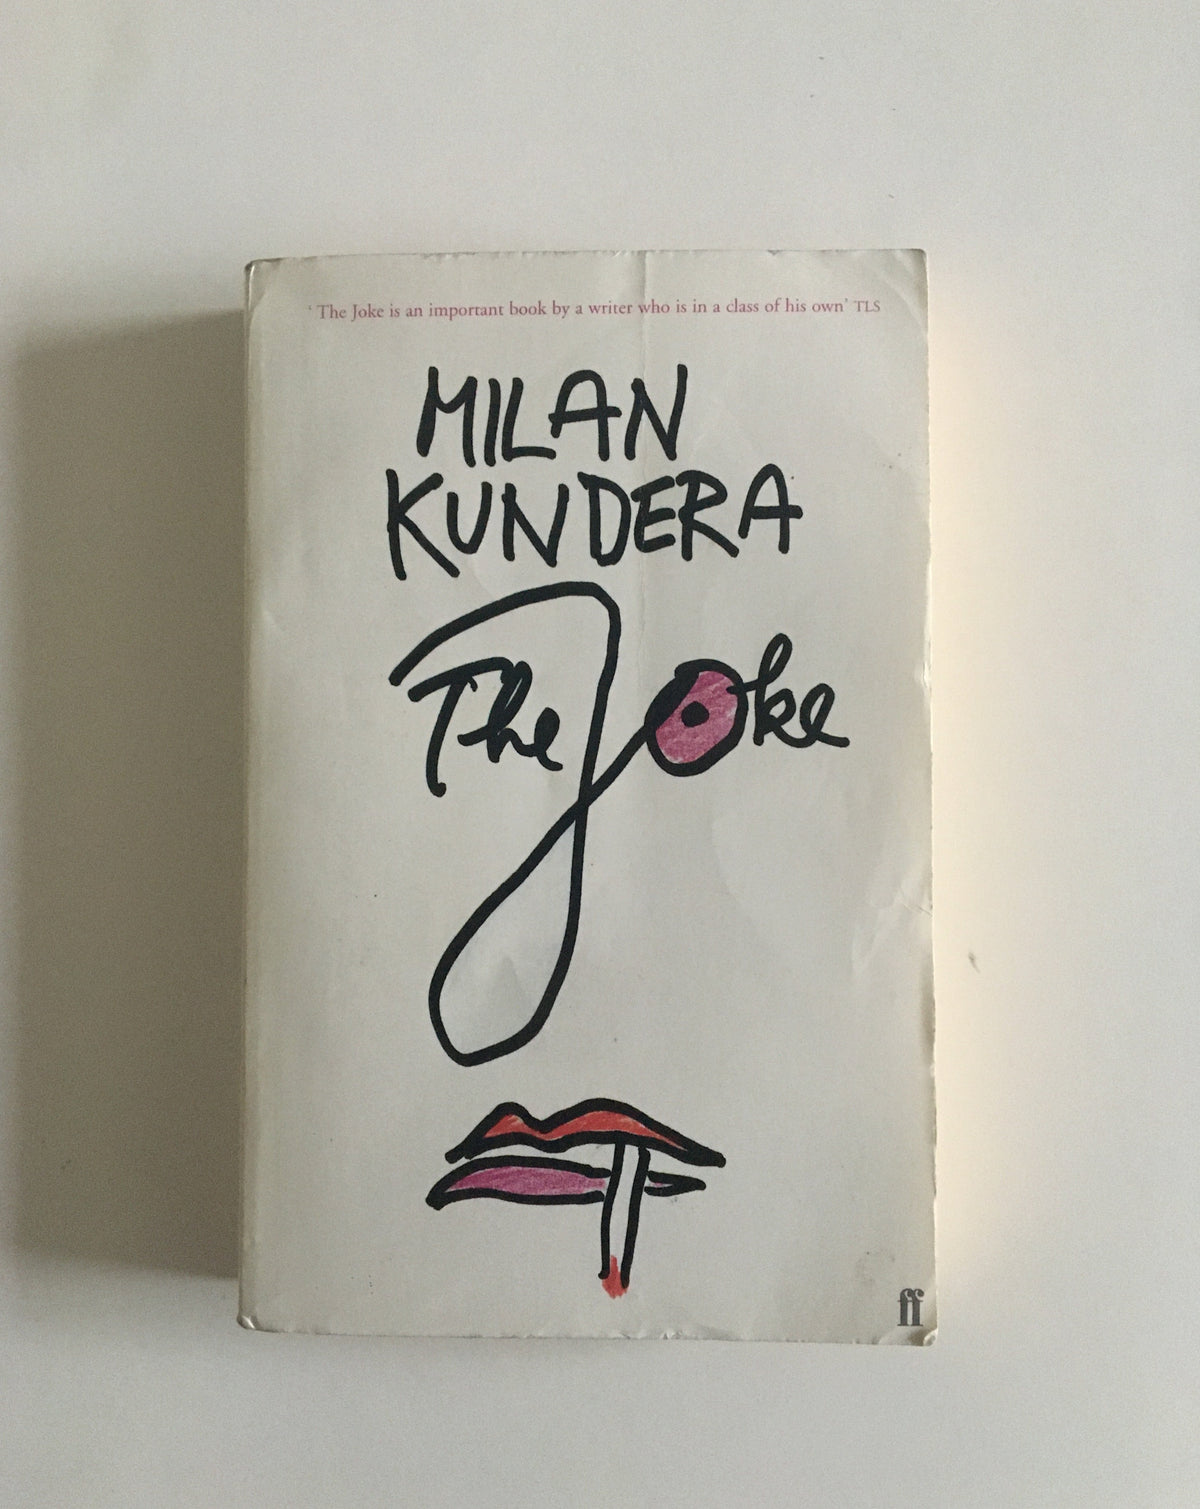 The Joke by Milan Kundera